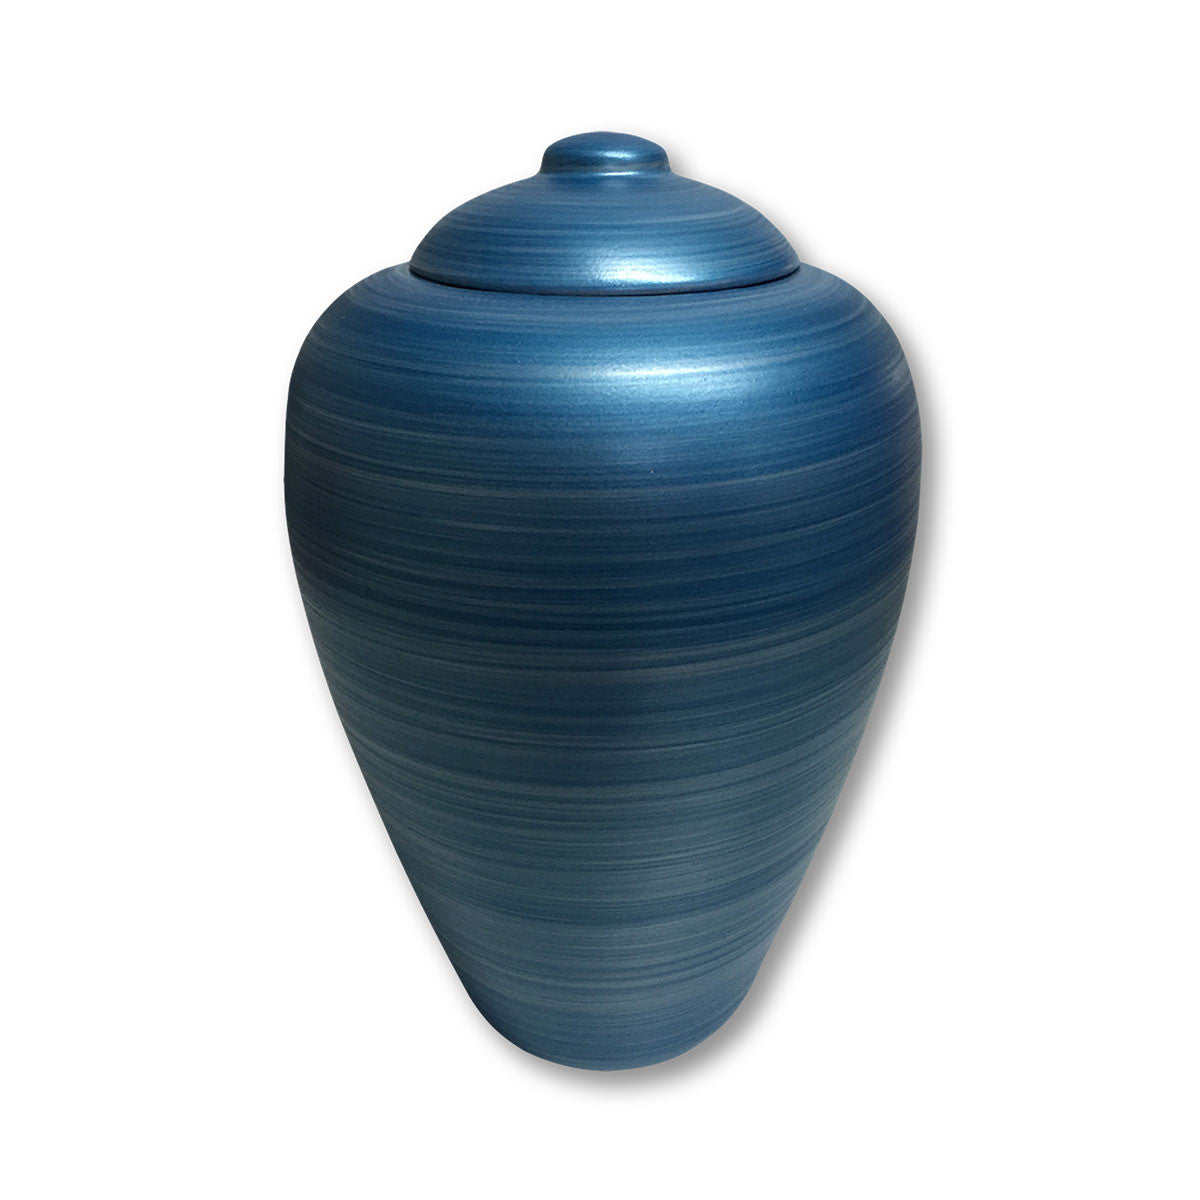 Blue with White Swirls - Classic Sand & Gelatin Biodegradable Cremation Urn